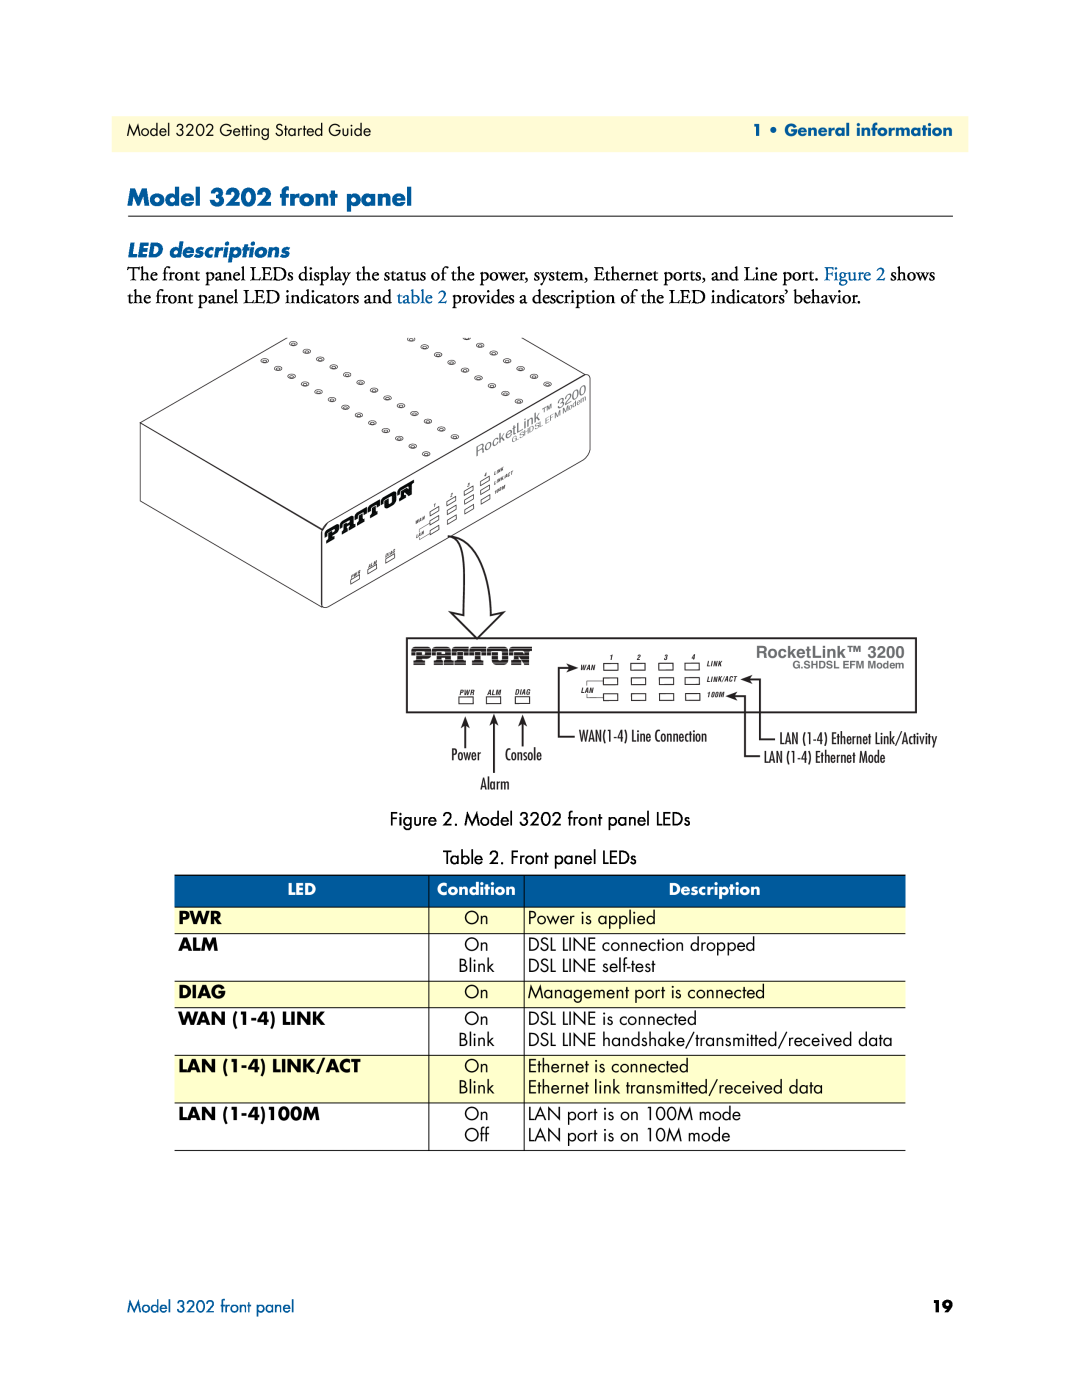 Patton electronic manual Model 3202 front panel, LED descriptions, RocketLink 